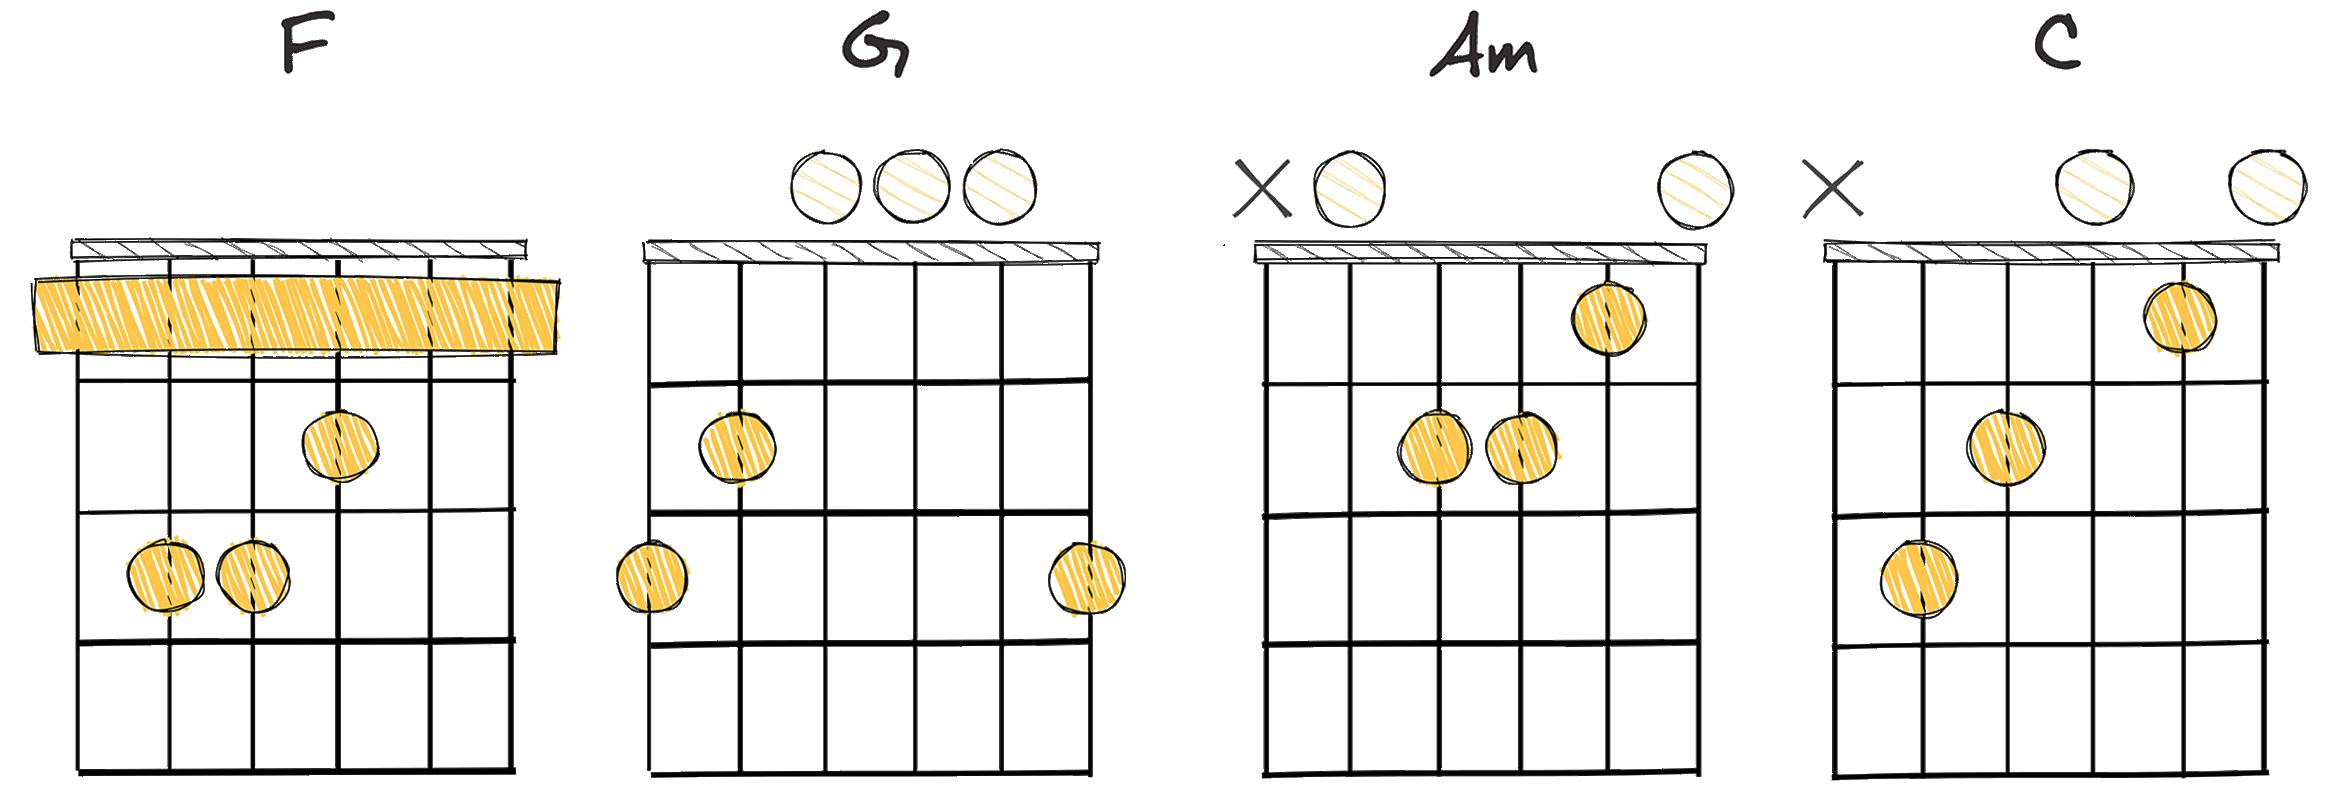 IV-V-vi-I (4-5-6-1) chords diagram